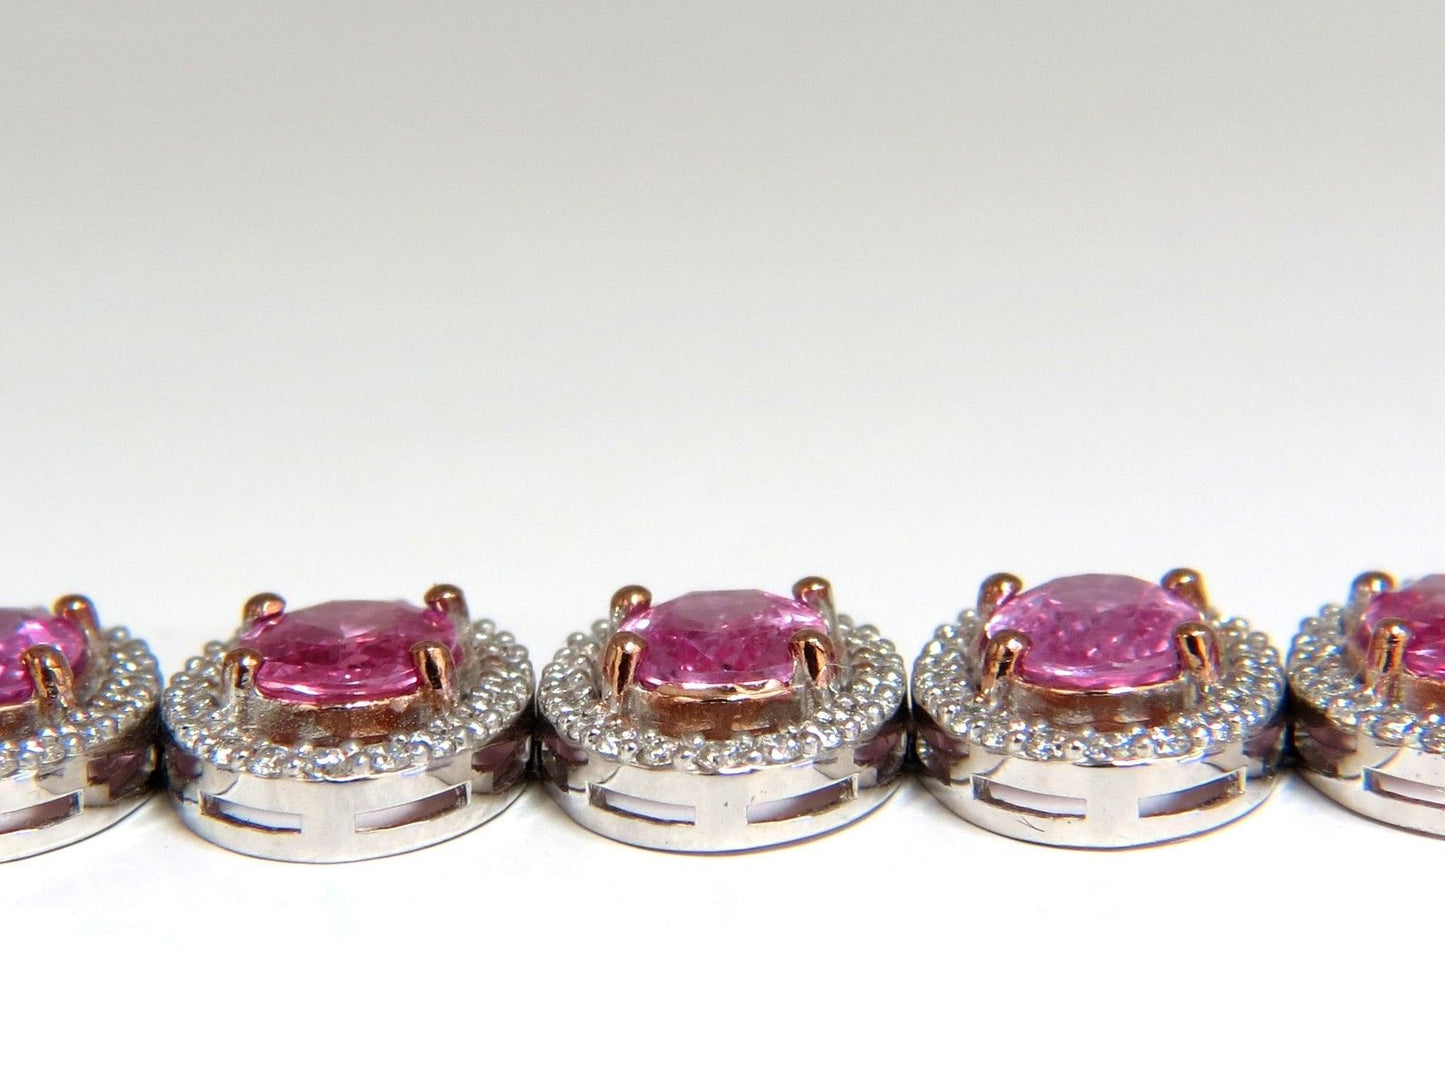 27.47ct natural Vivid Pink Sapphire diamond bracelet 14kt g/vs pink halo prime